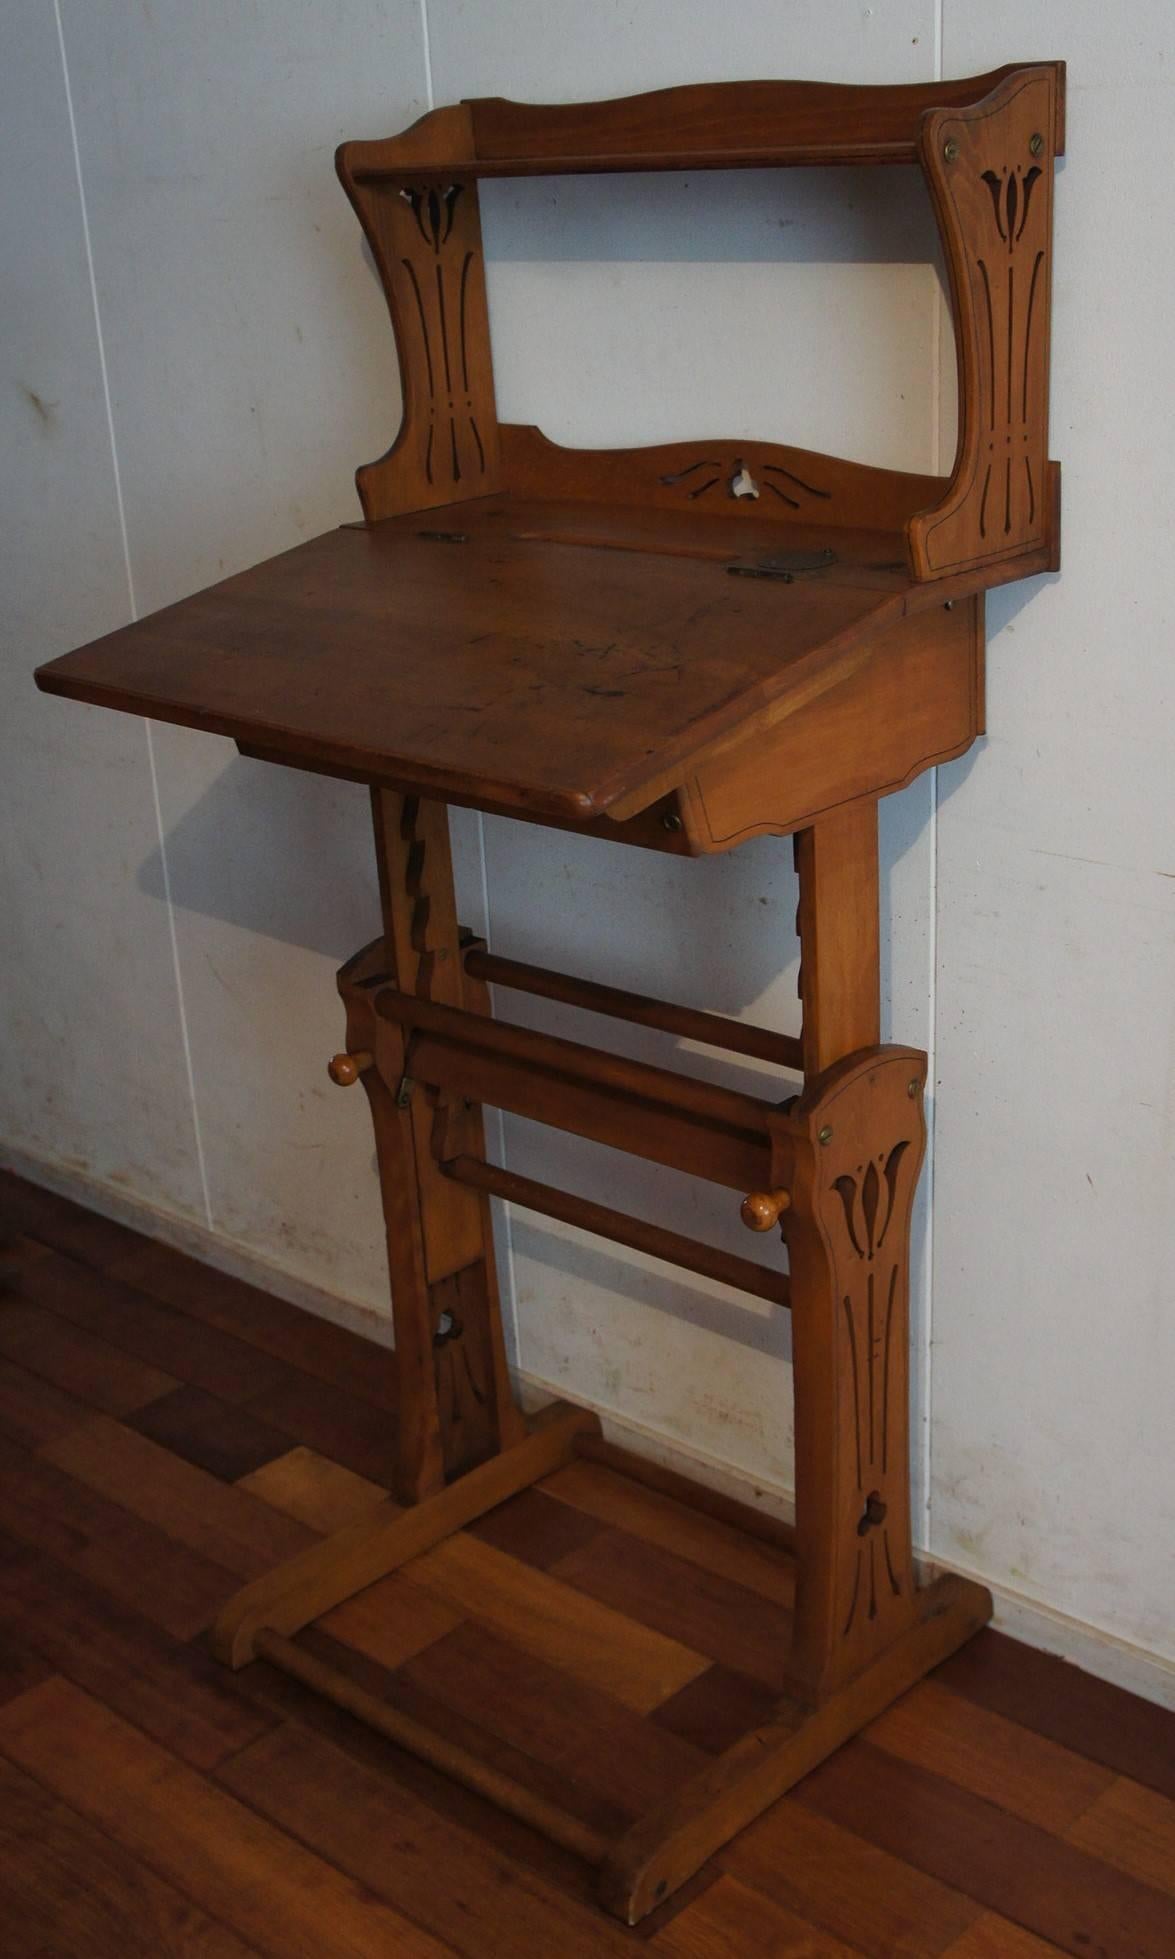 Hand-Crafted Antique Adjustable Jugendstil Working Table with Inkwell for Craftsman & Artists